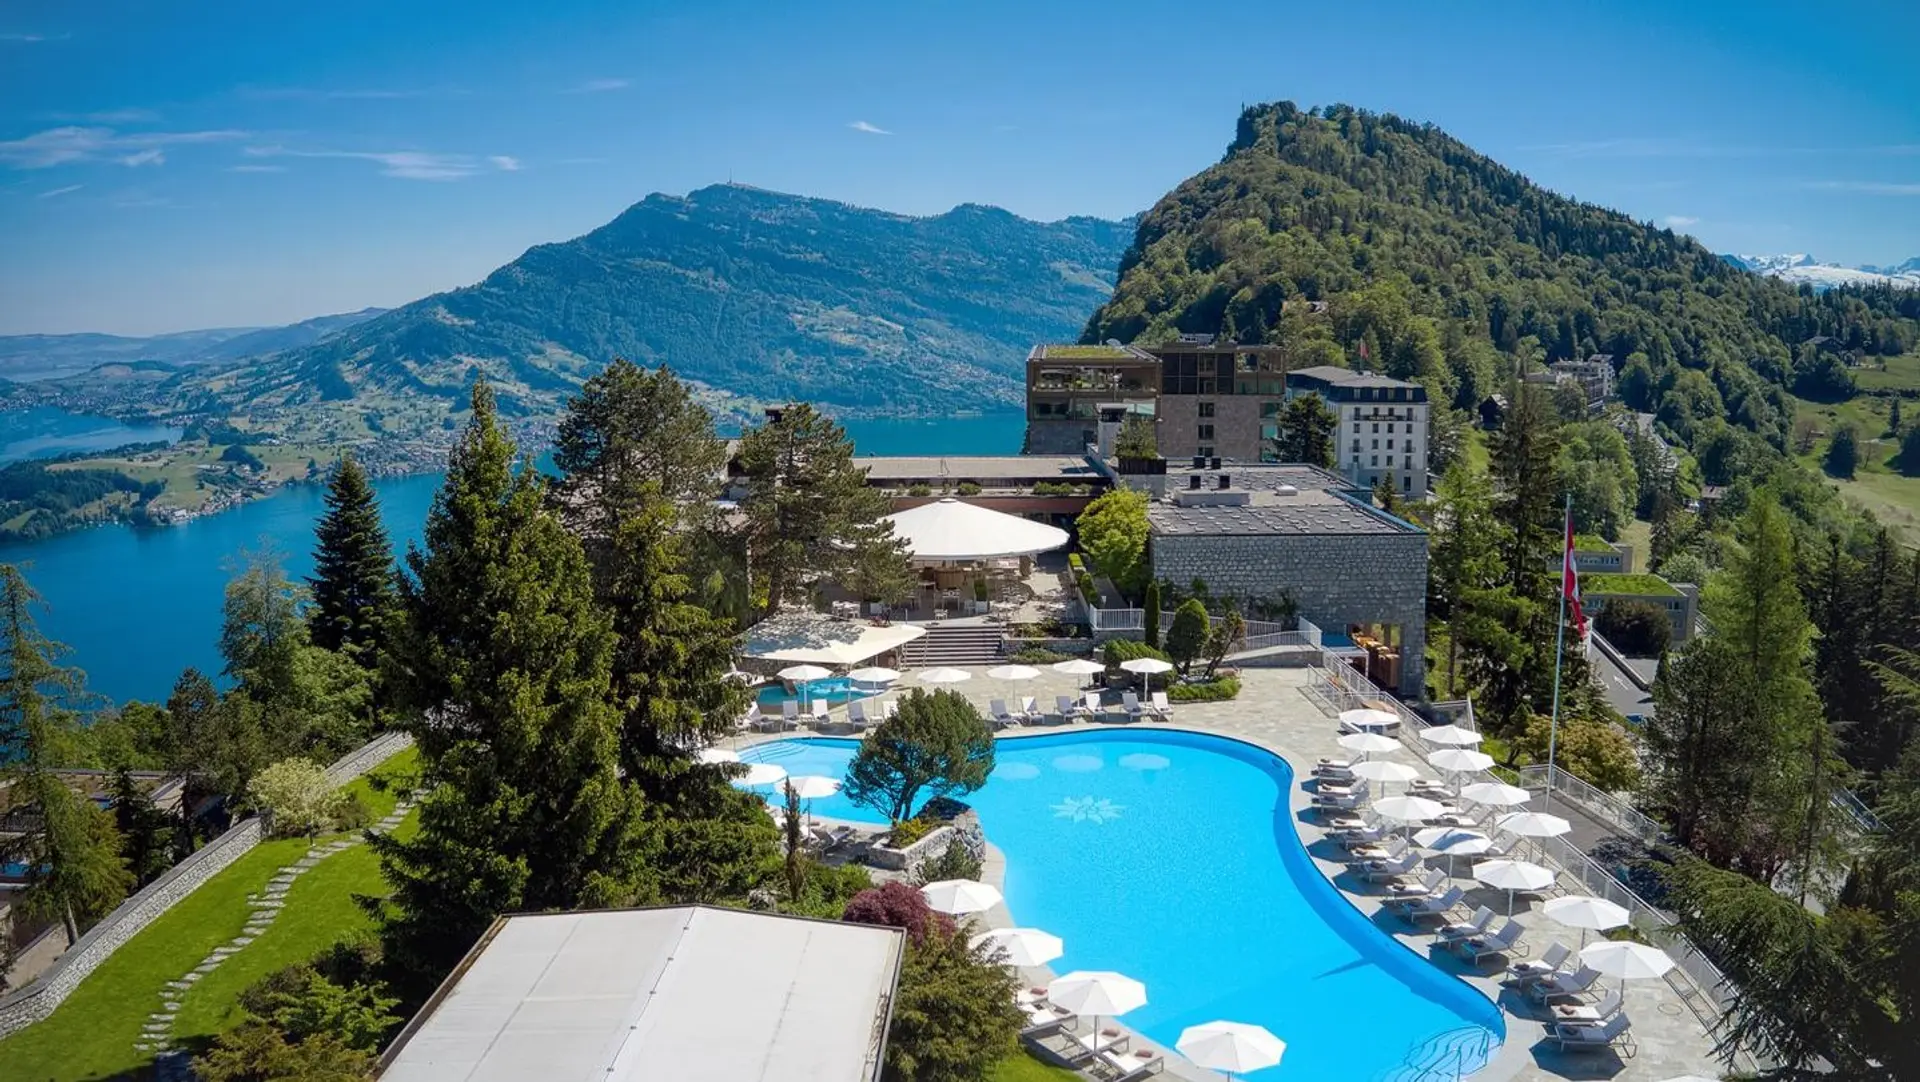 Hotel review Service & Facilities' - Bürgenstock Hotels & Resort - 2